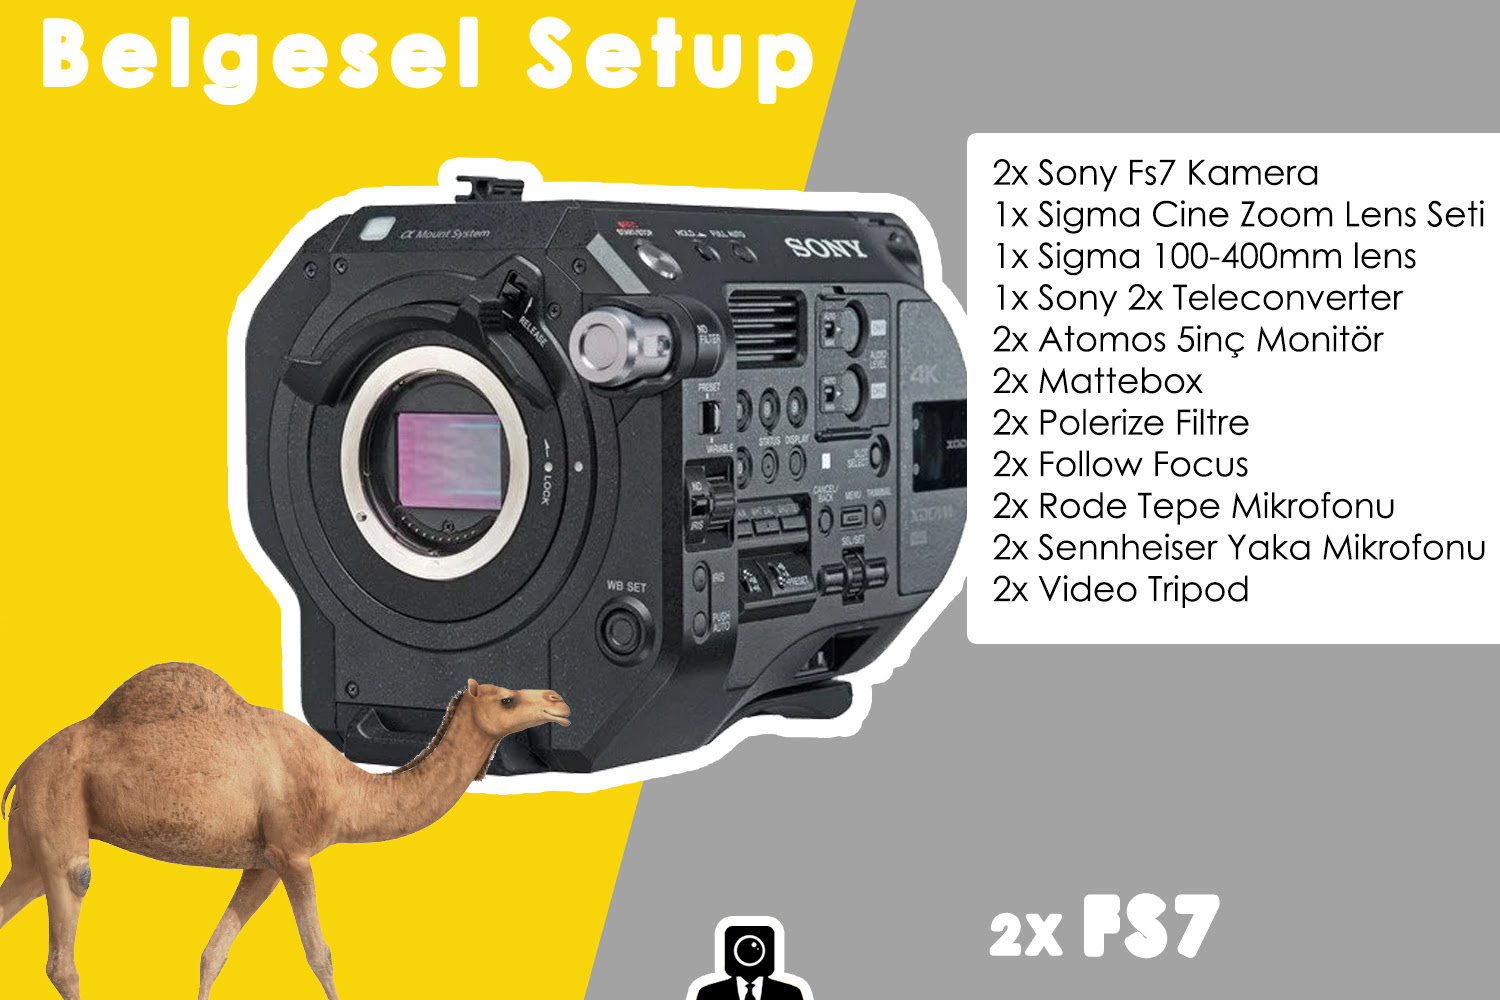 Kiralık Sony FS7 Kamera Belgesel Seti